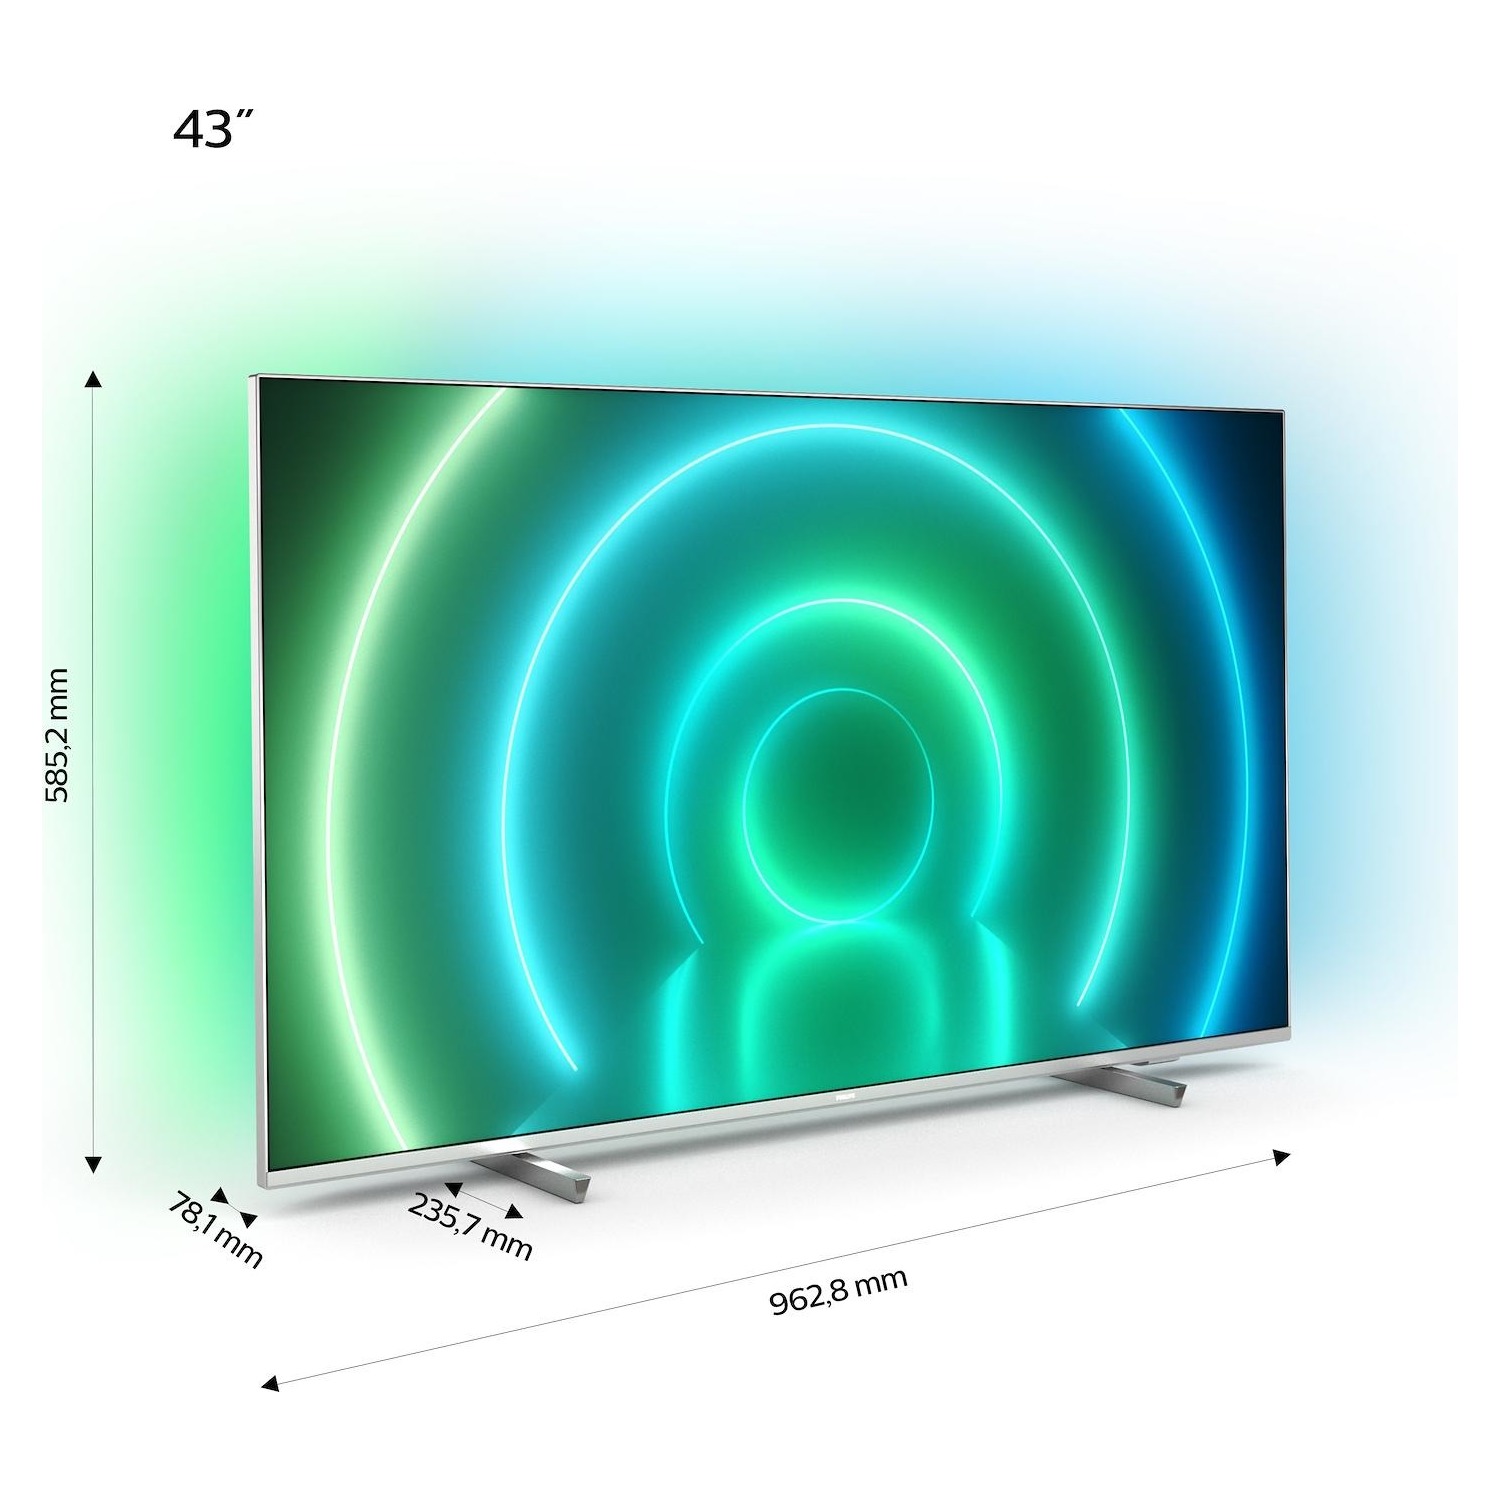 Immagine per TV LED 4K UHD Android Smart Philips 43PUS7956 da DIMOStore